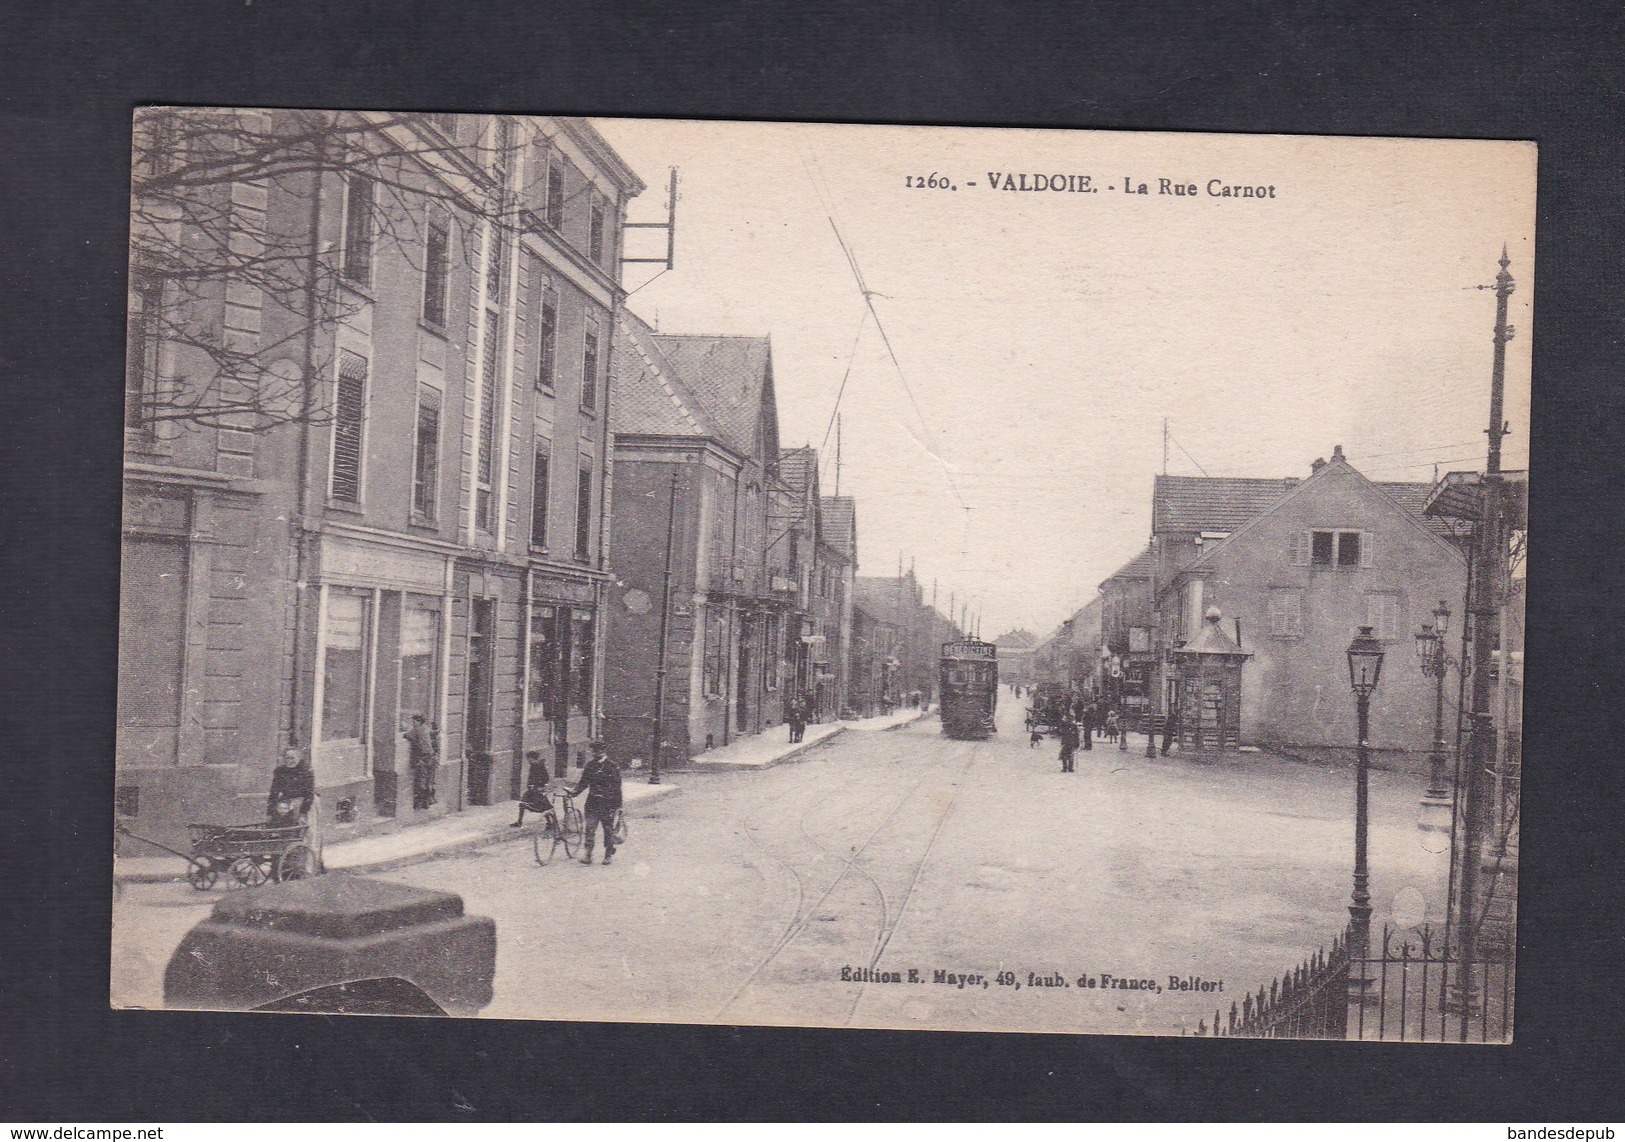 Vente Immediate Valdoie (90) Rue Carnot ( Velo Tramway Ed. Mayer) - Valdoie